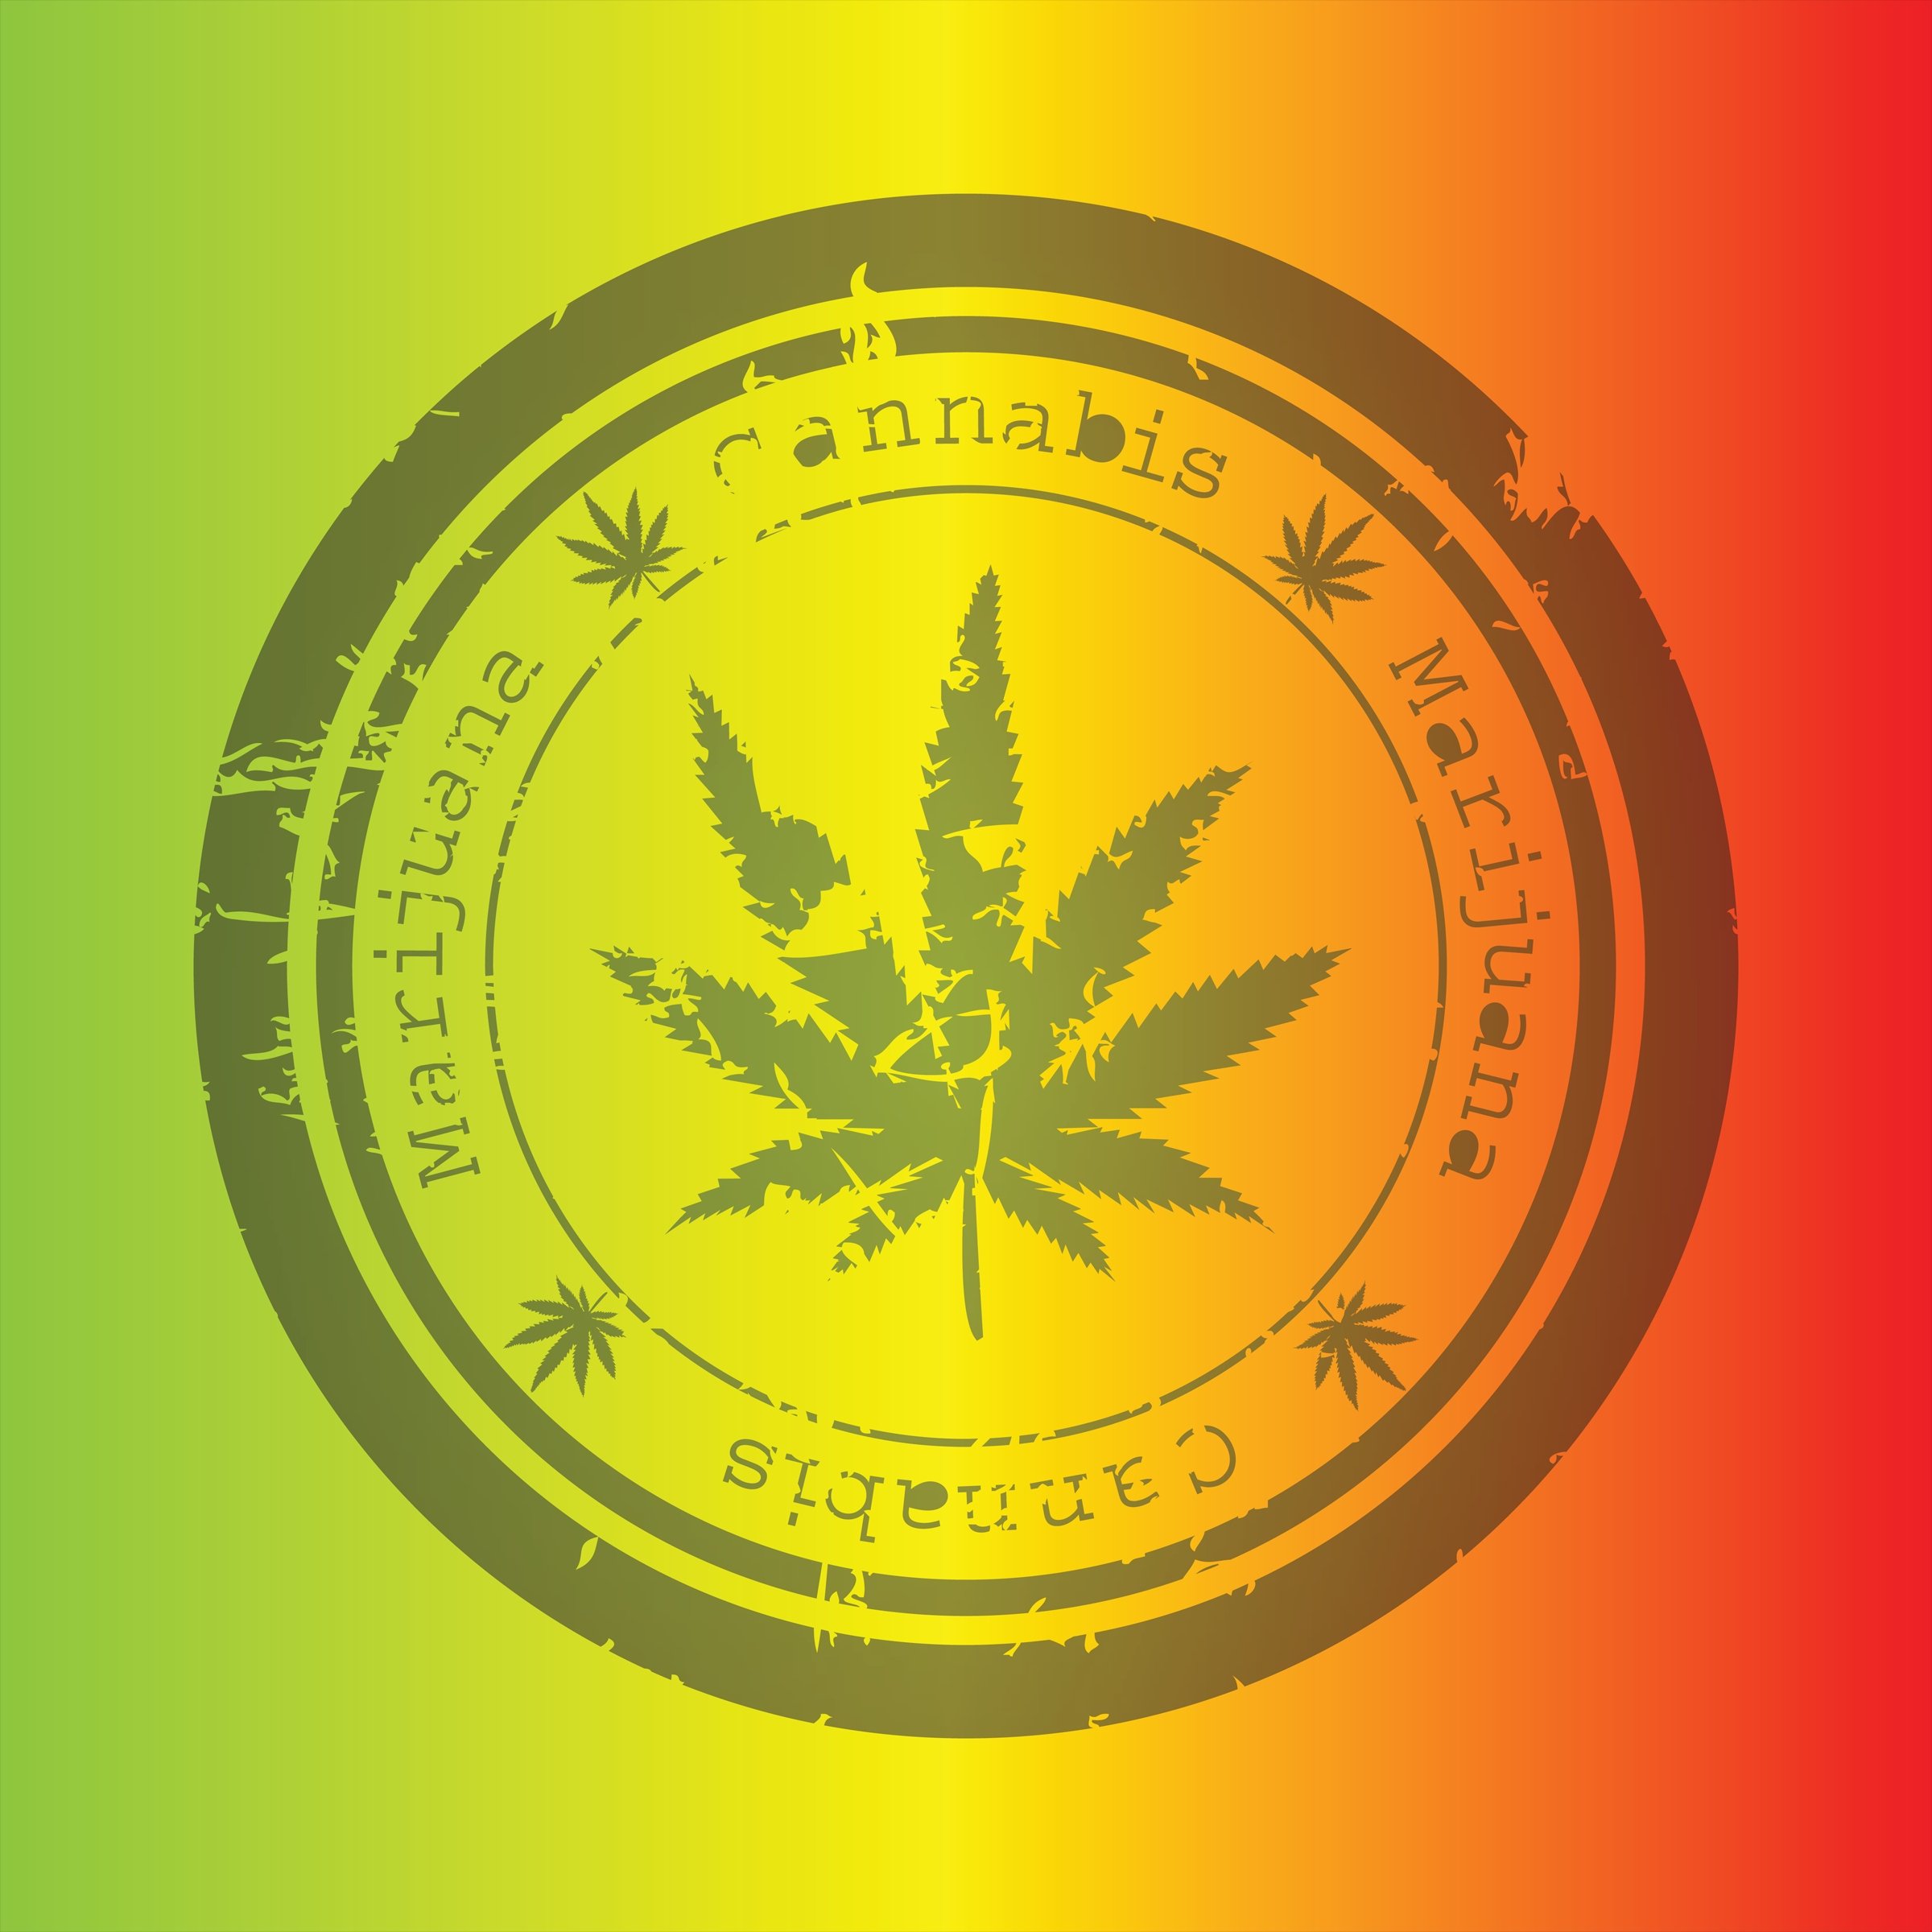 420, Marijuana, Weed, Drugs Wallpaper